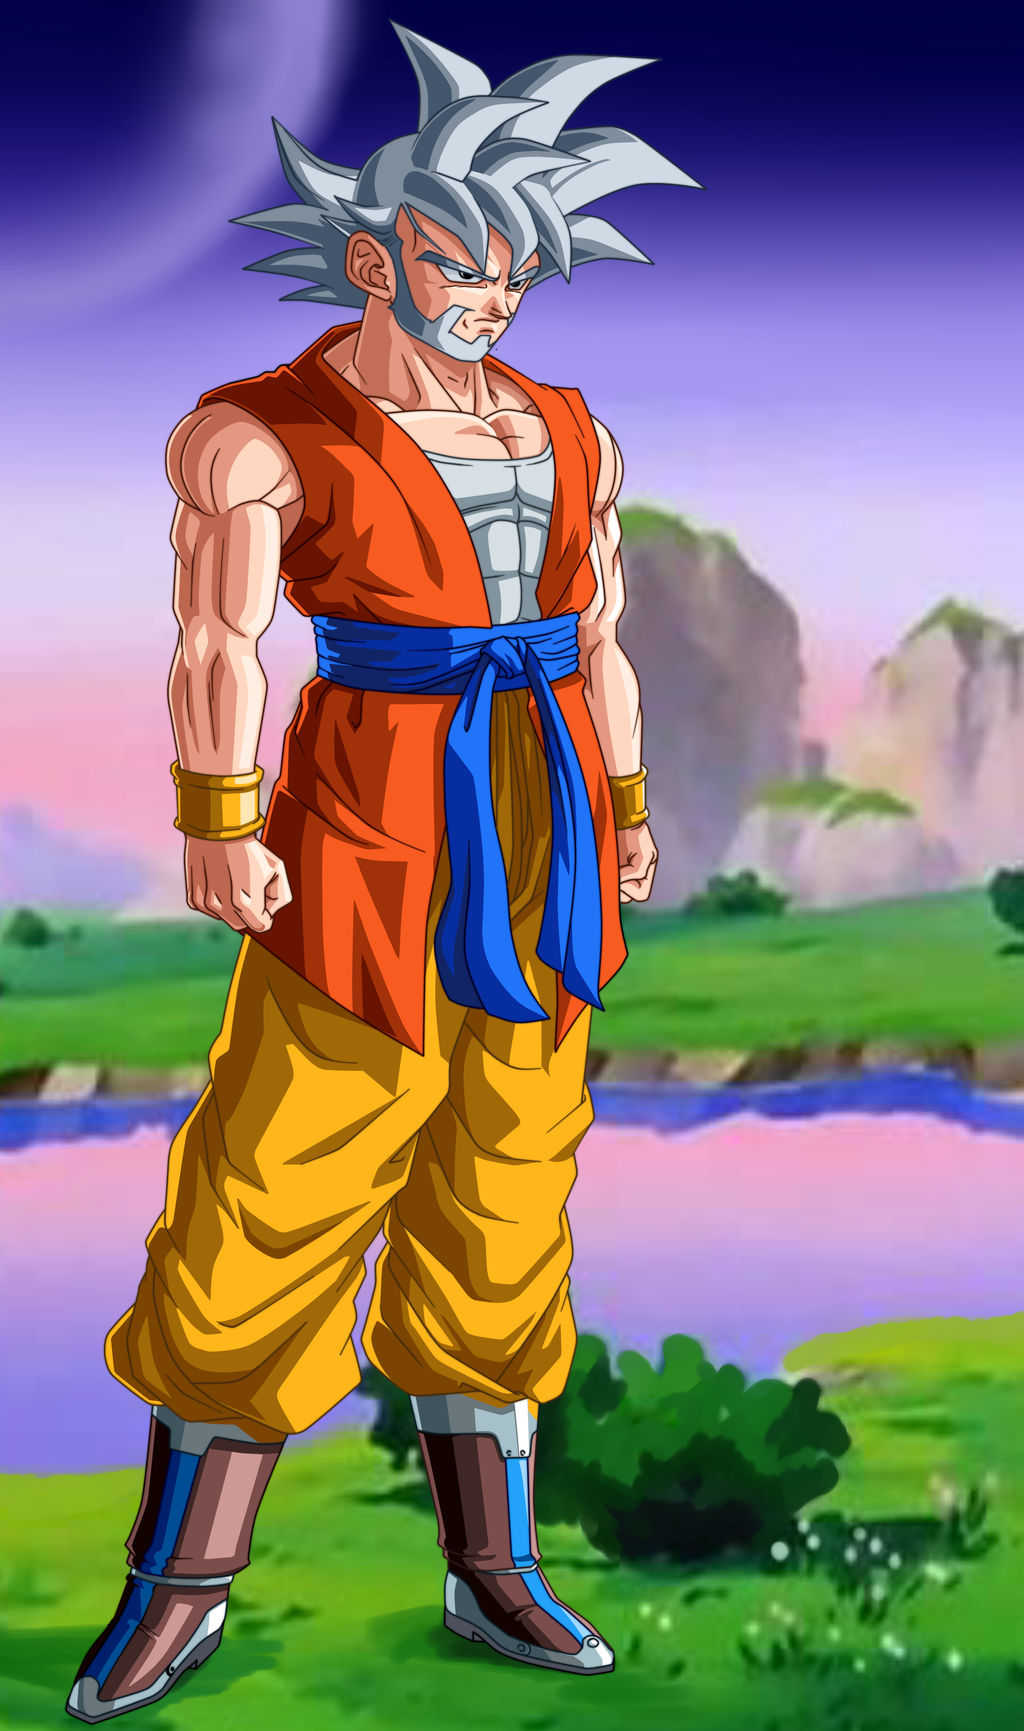 Grand Elder Saiyan: Goku by Xilvor on DeviantArt